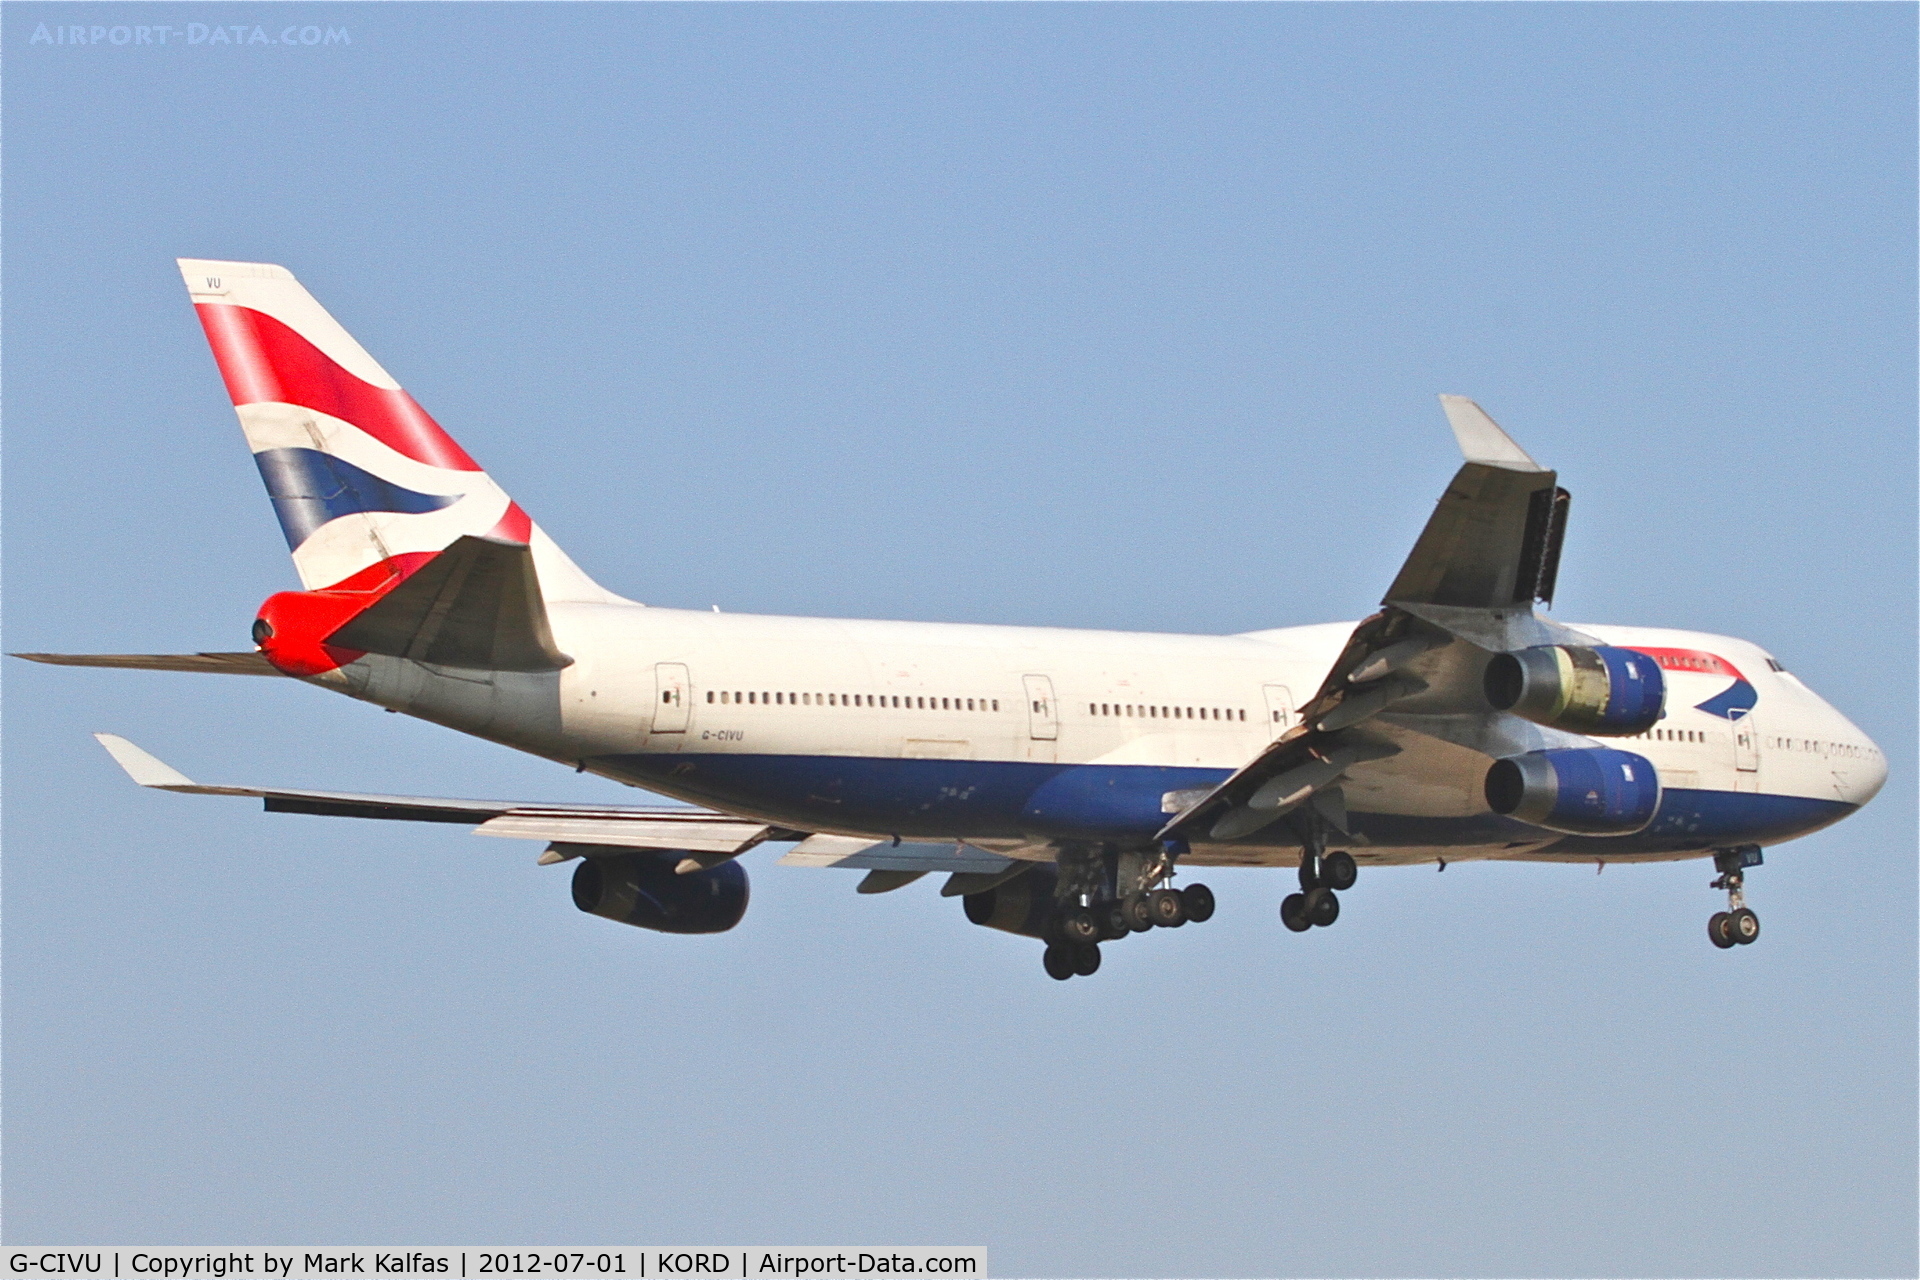 G-CIVU, 1998 Boeing 747-436 C/N 25810, British Airways Boeing 747-436, BAW297 arriving from London Heathrow /EGLL minus an engine cowling on #4, on approach to RWY 14R KORD.